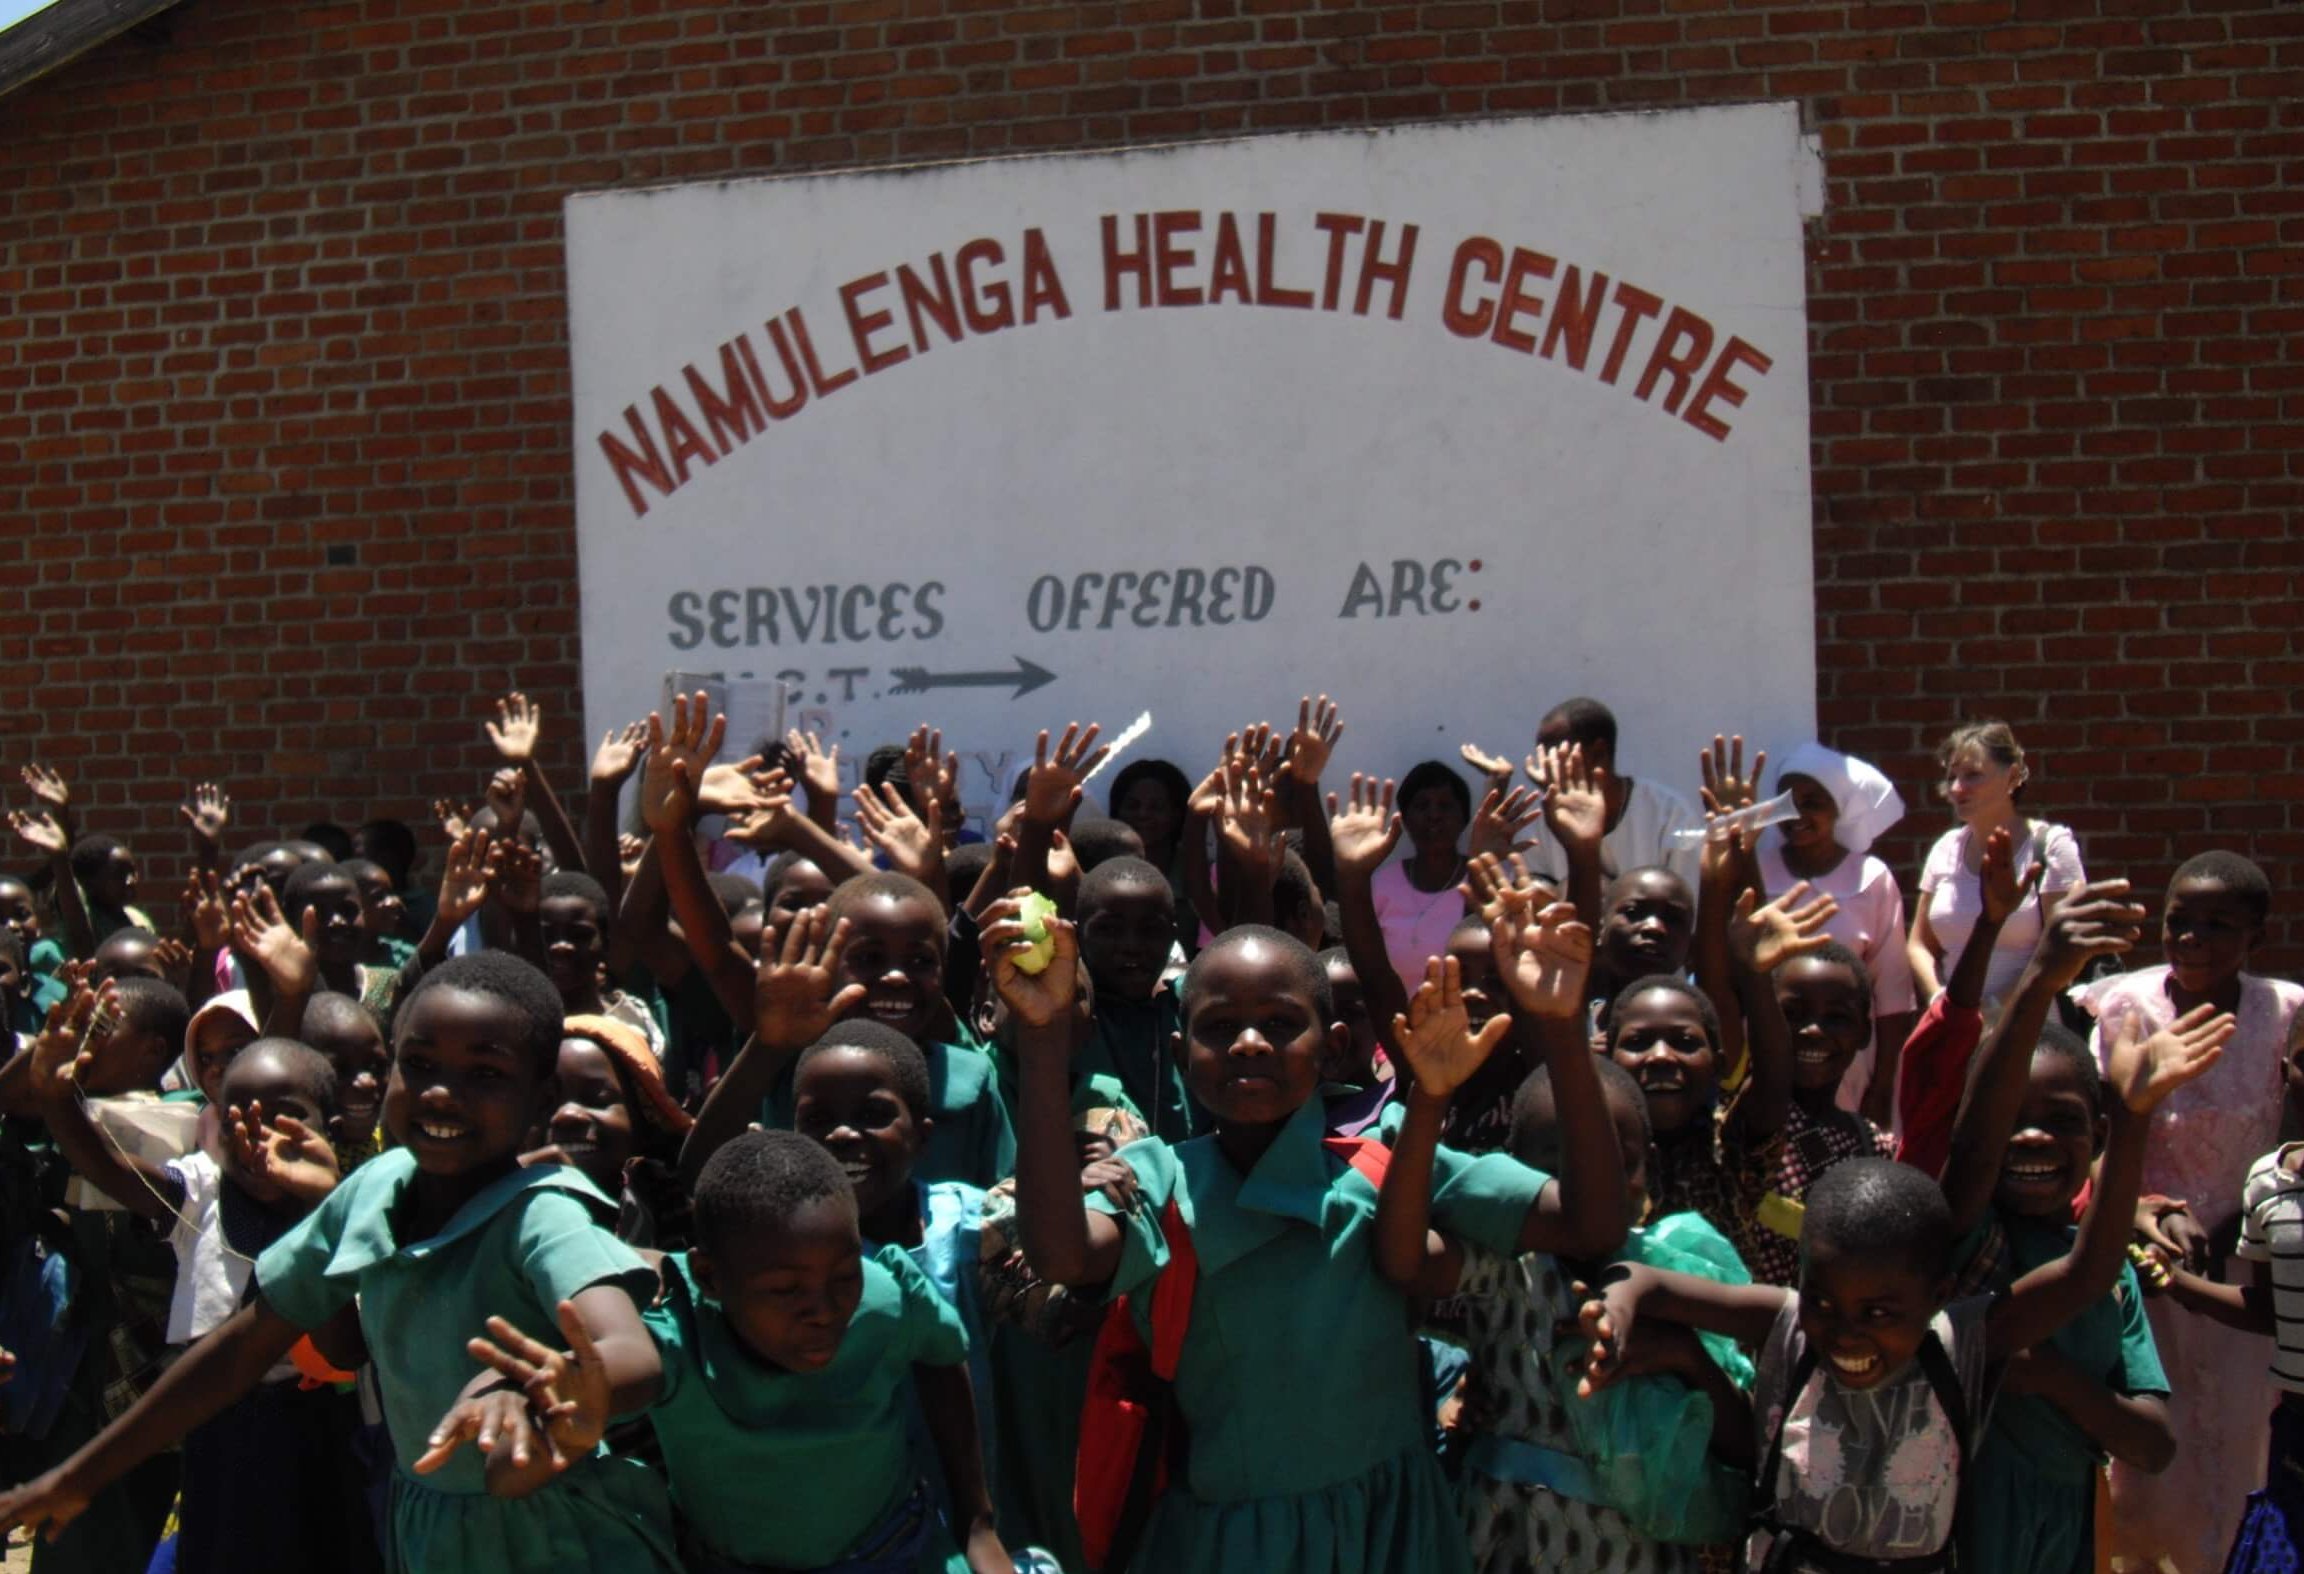 Namulenga Health Centre